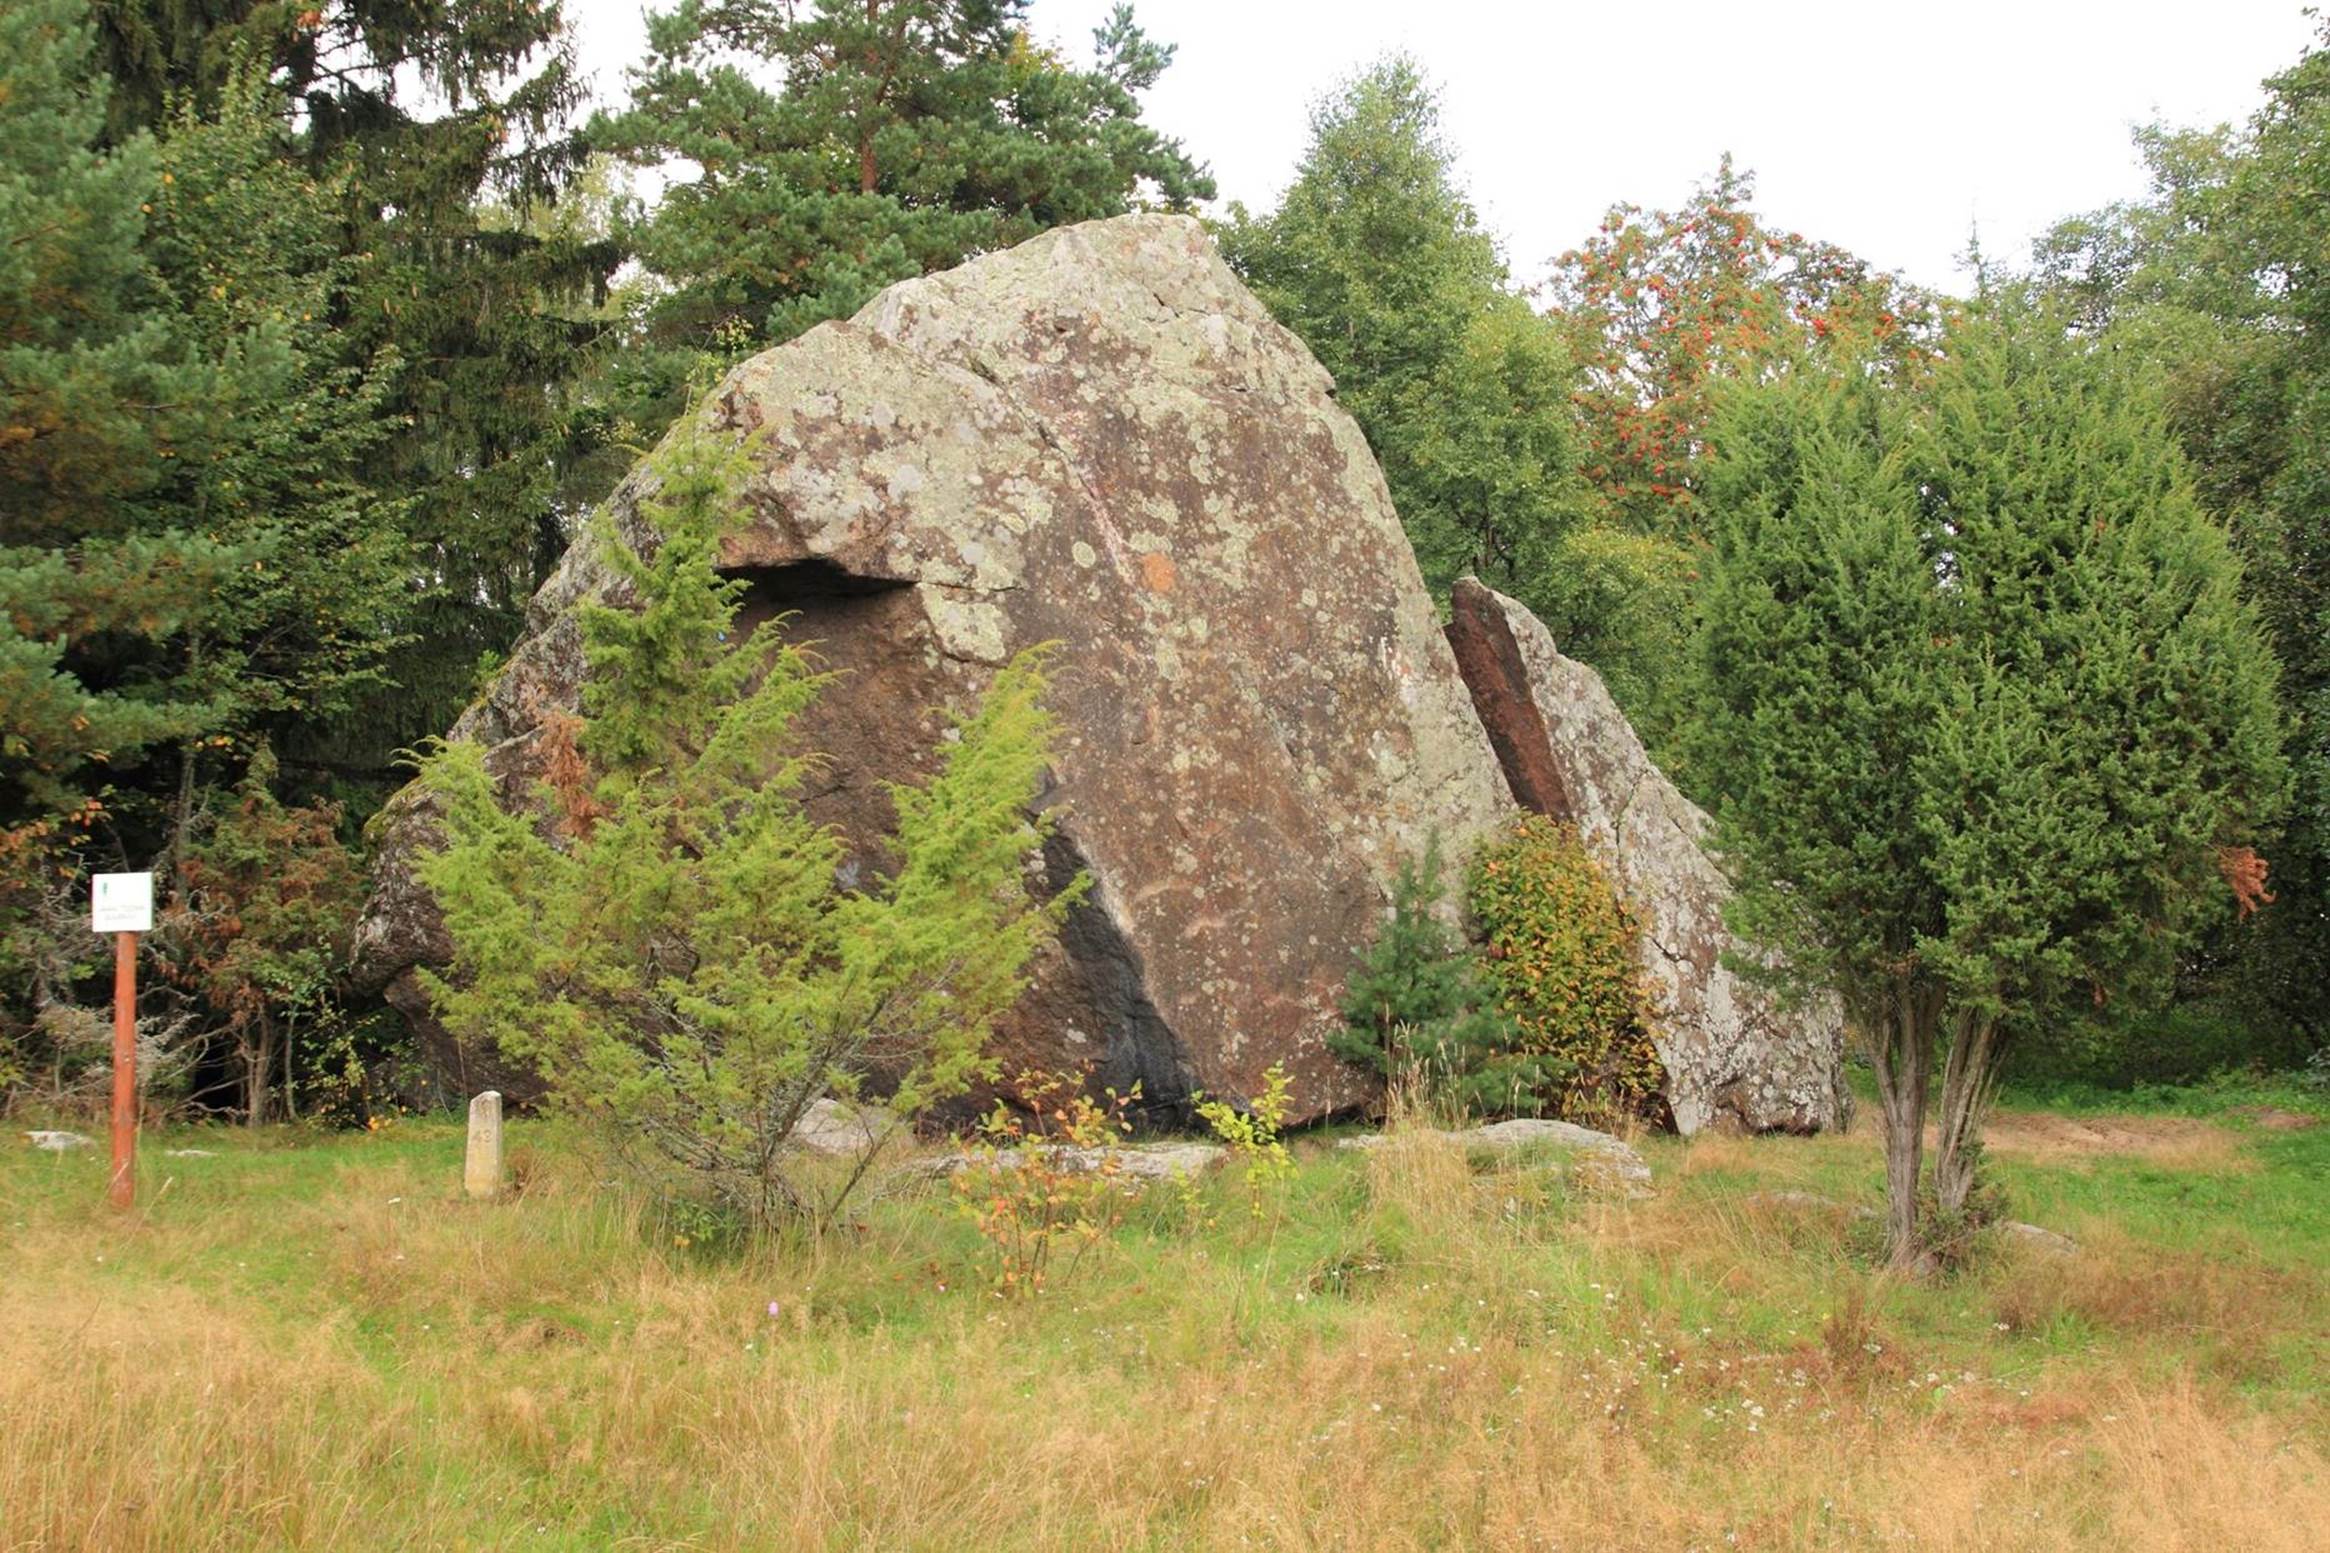  Jaani-Tooma boulder in Lahemaa. Photo: Riina Kotter